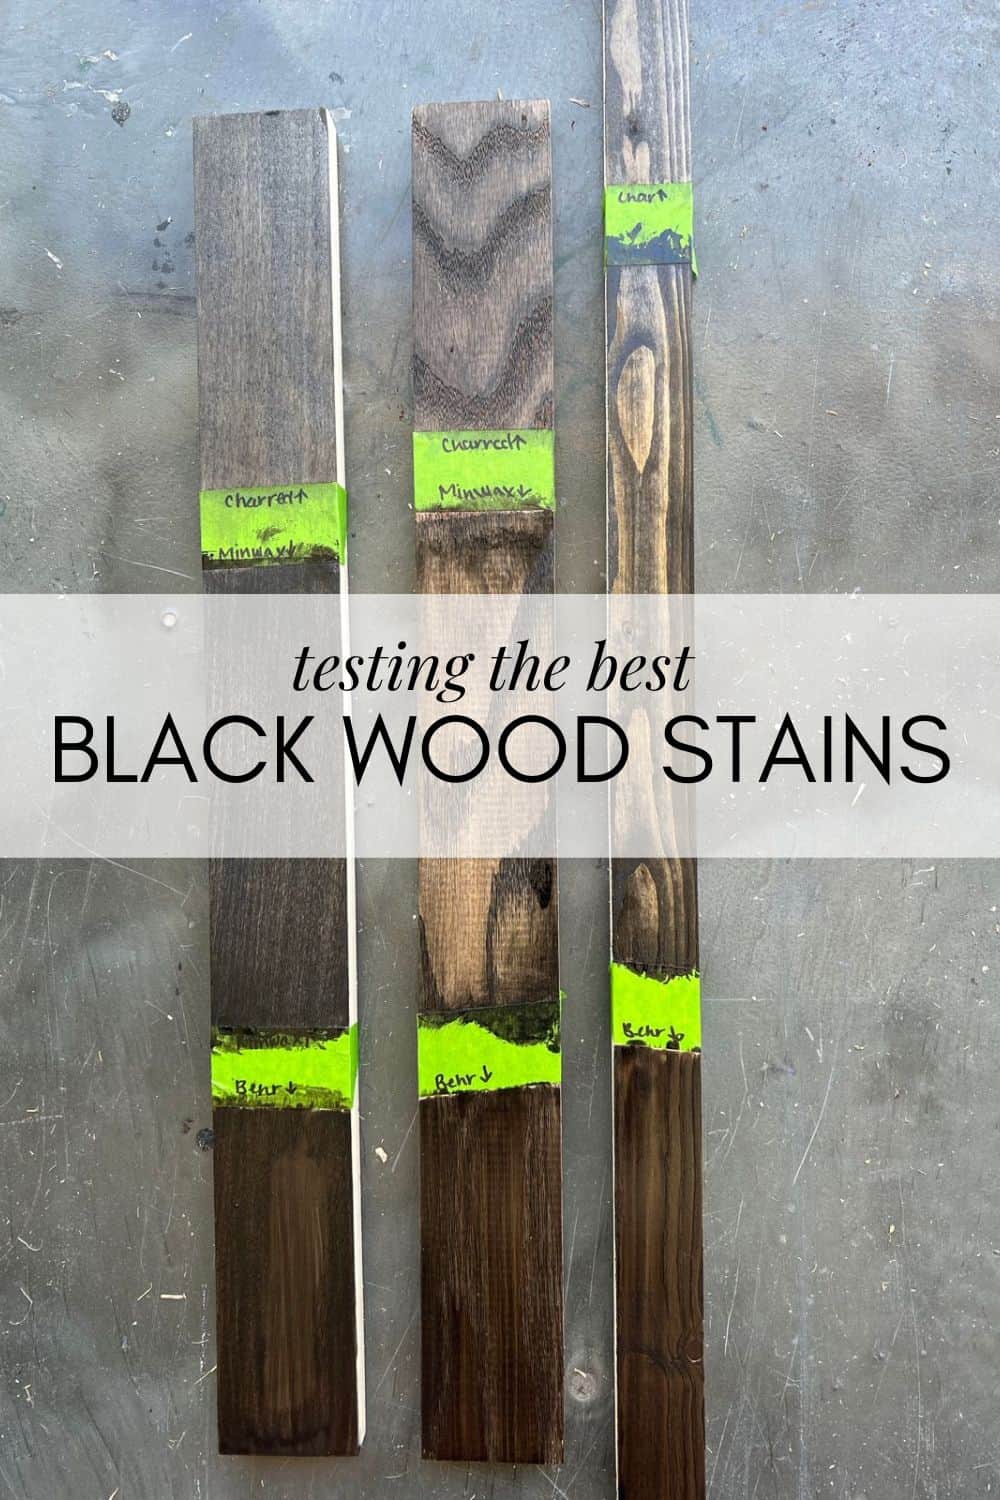 Ebony vs. True Black  Exterior wood stain colors, Hardwood floor